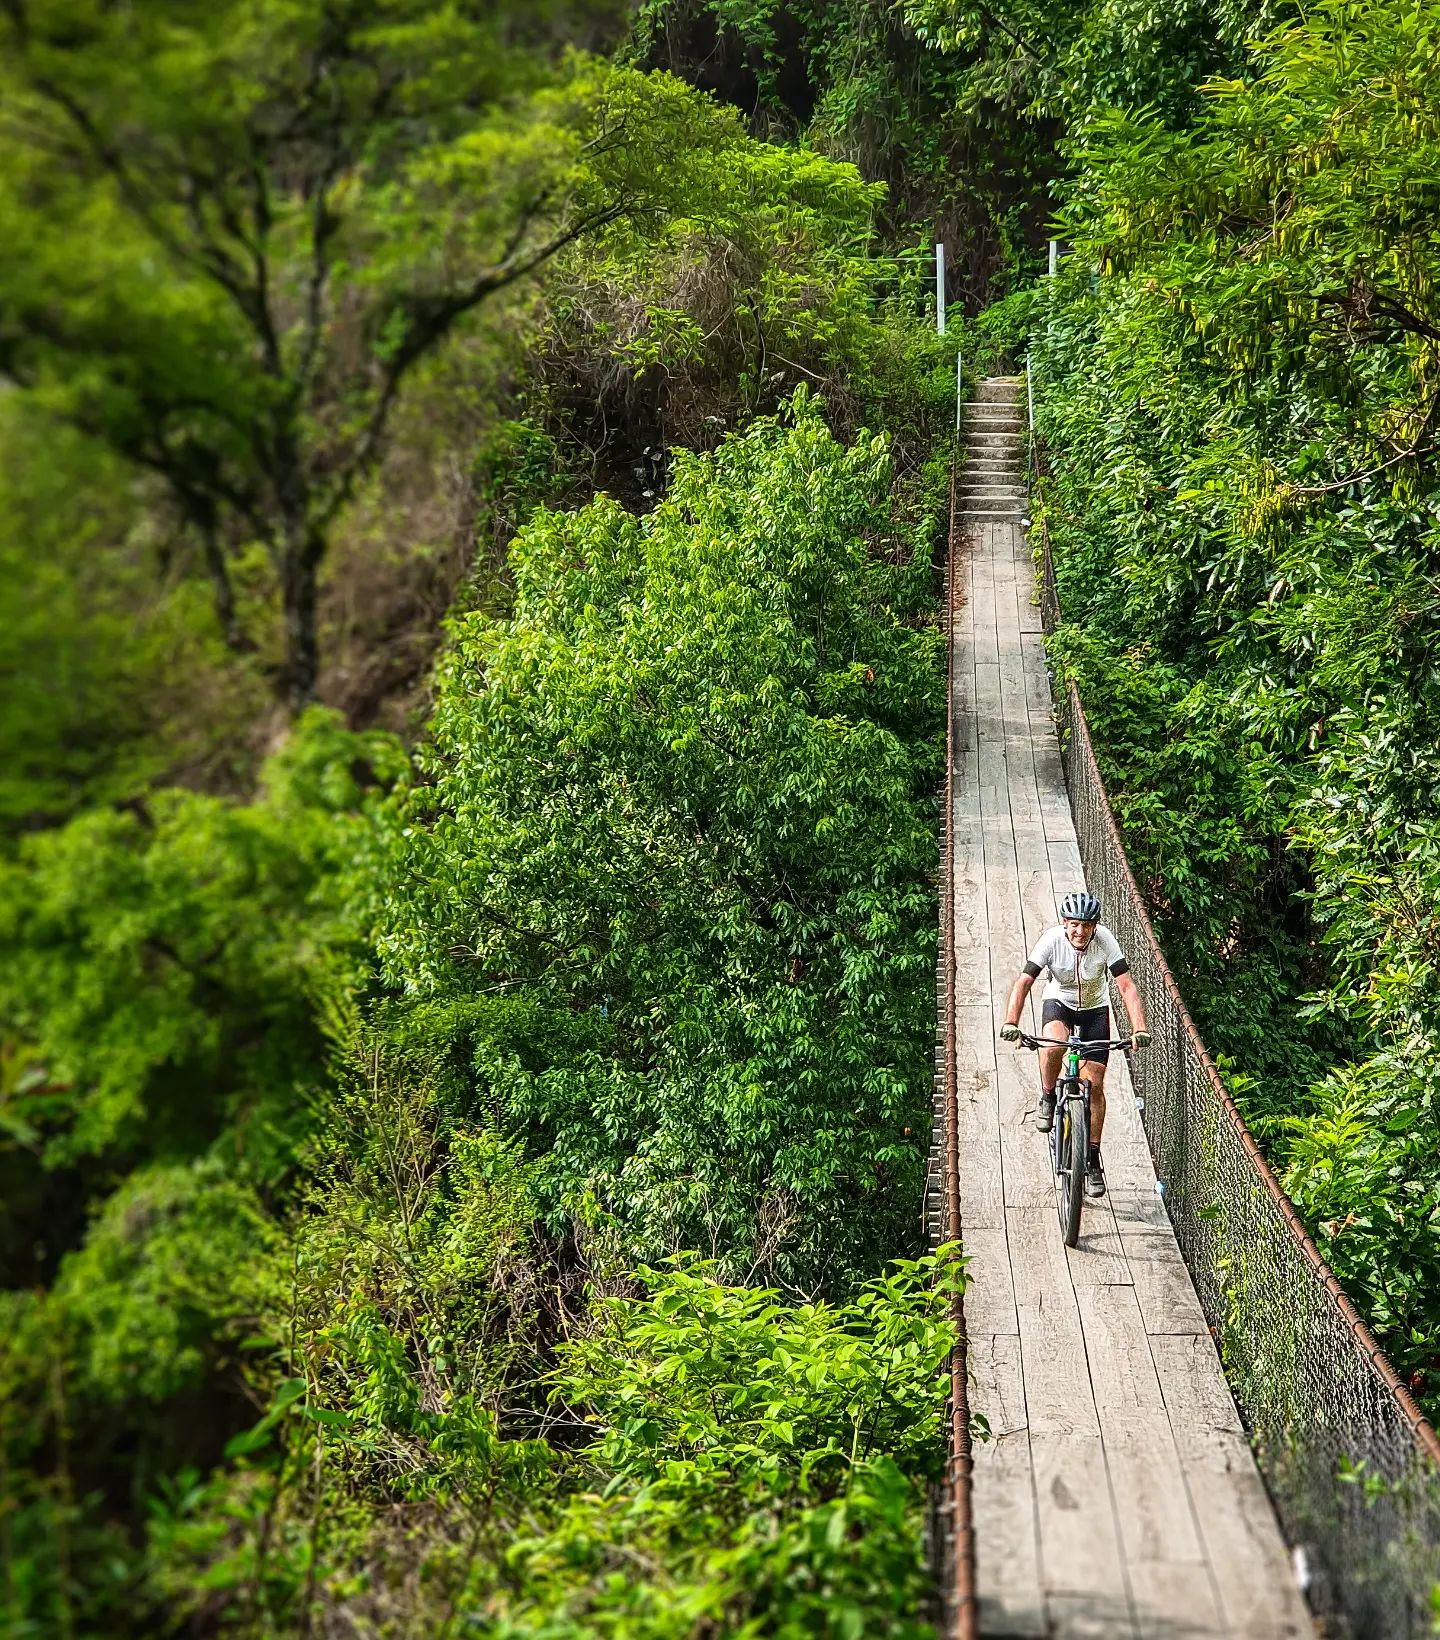 Por donde? 😵‍💫
.
#puentecolgante #exploraguate #mtblife #mtbtravel #mtbtours #visitguatemala #outside #bikeguide #gorideyourbike #mtbtravel #guatemala🇬🇹 #centralamerica #mtbguatemala #ecotourism #mountainbikeguatemala